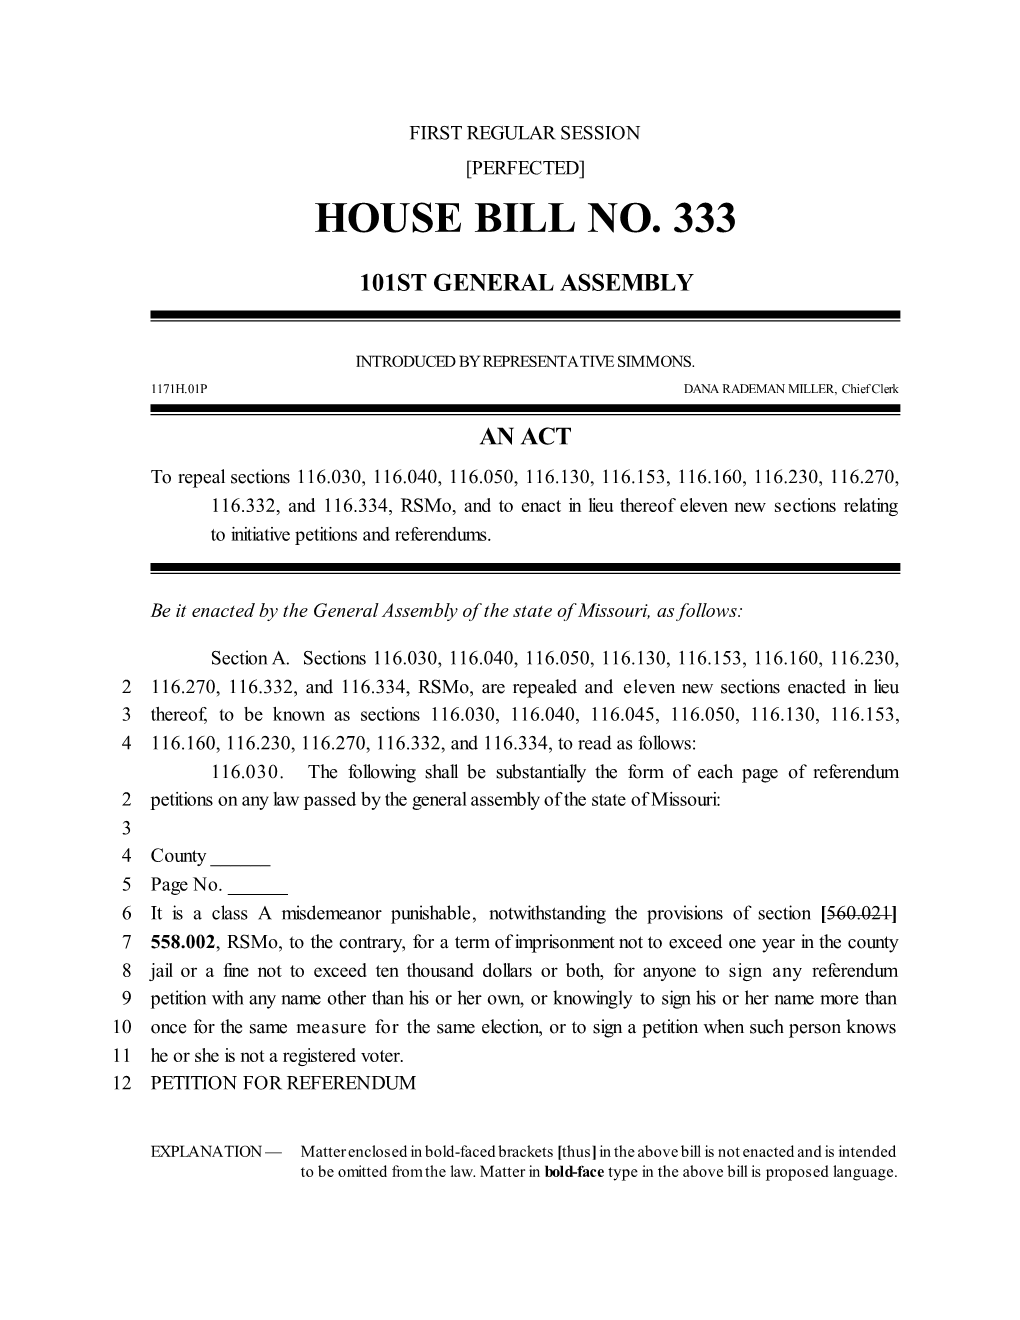 House Bill No. 333